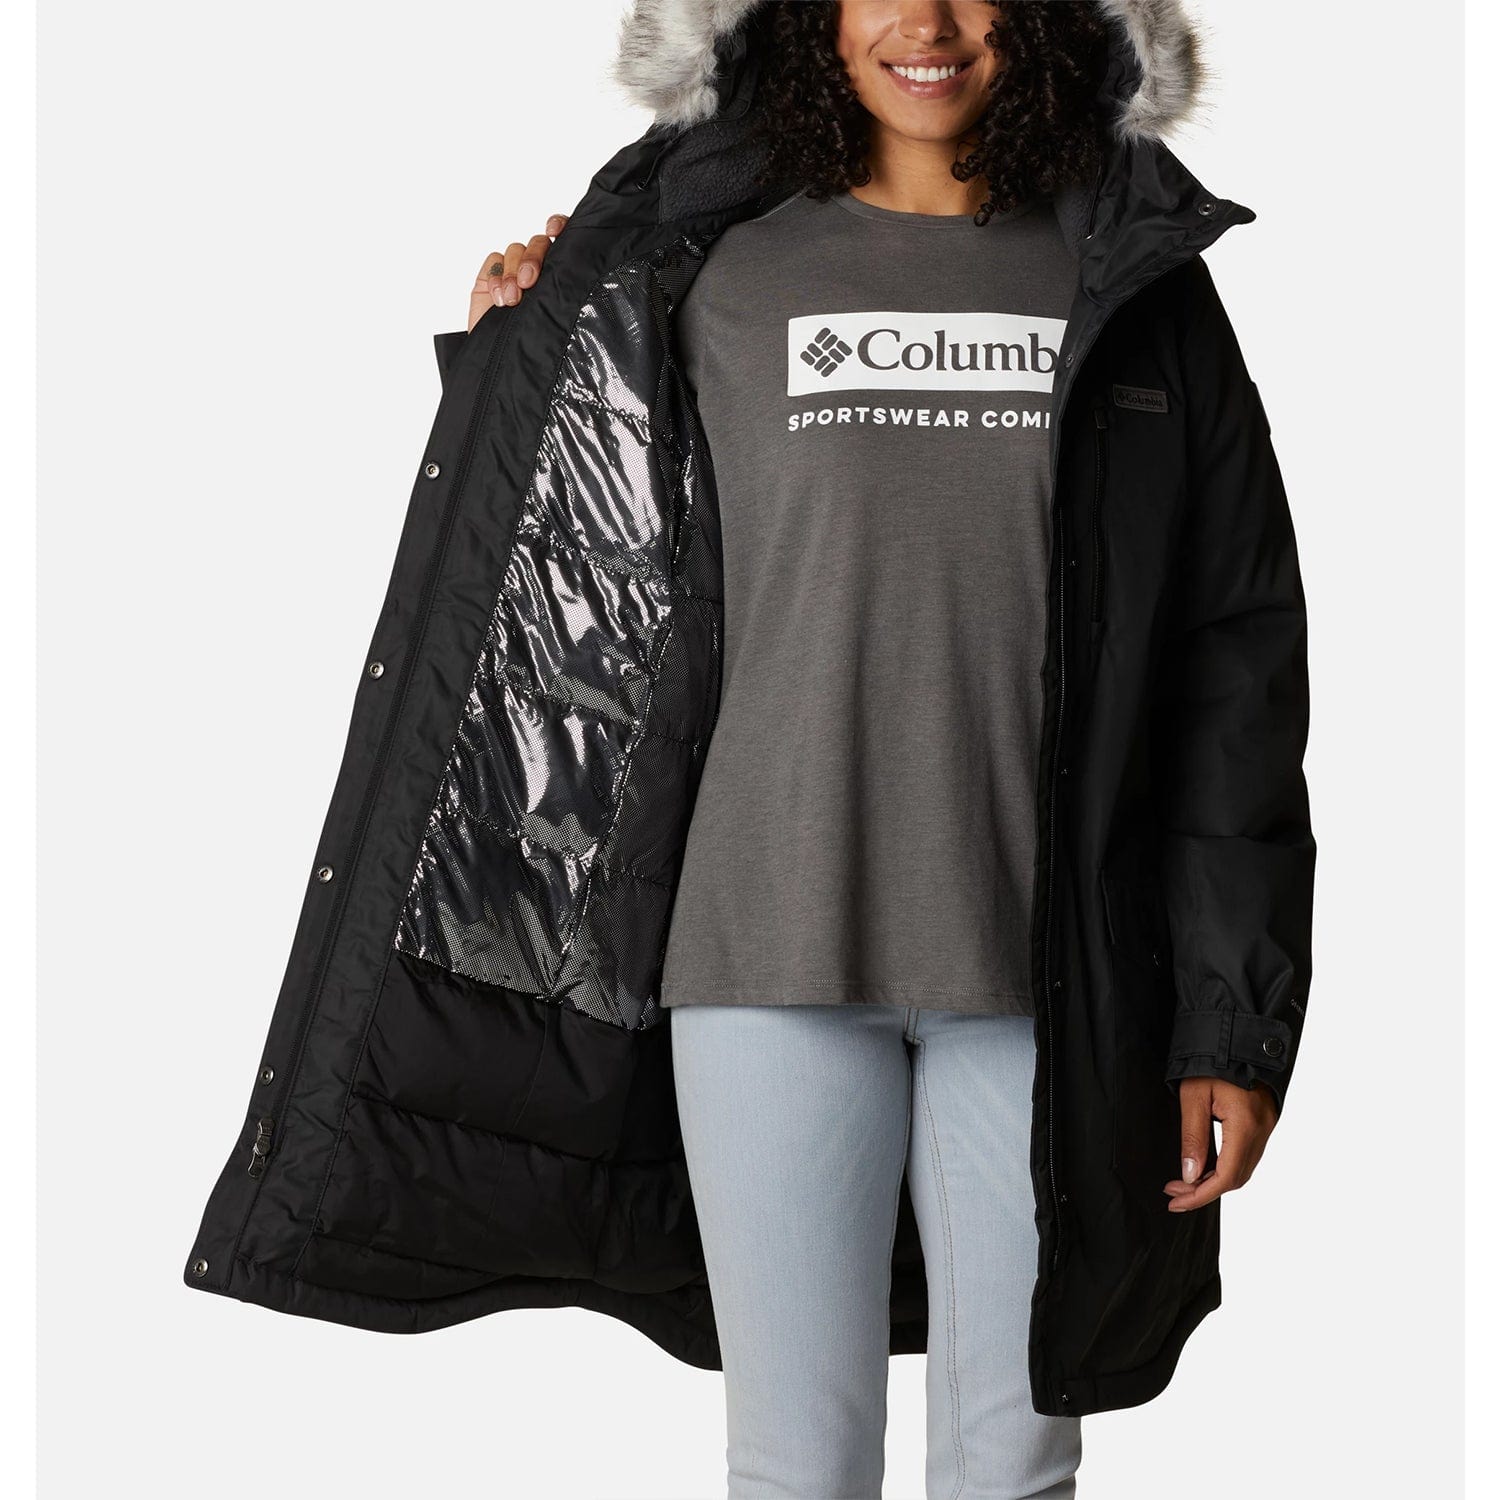 Columbia Sportswear Jacket Womens S Snow Red Black Zip Up Hood Winter Coat